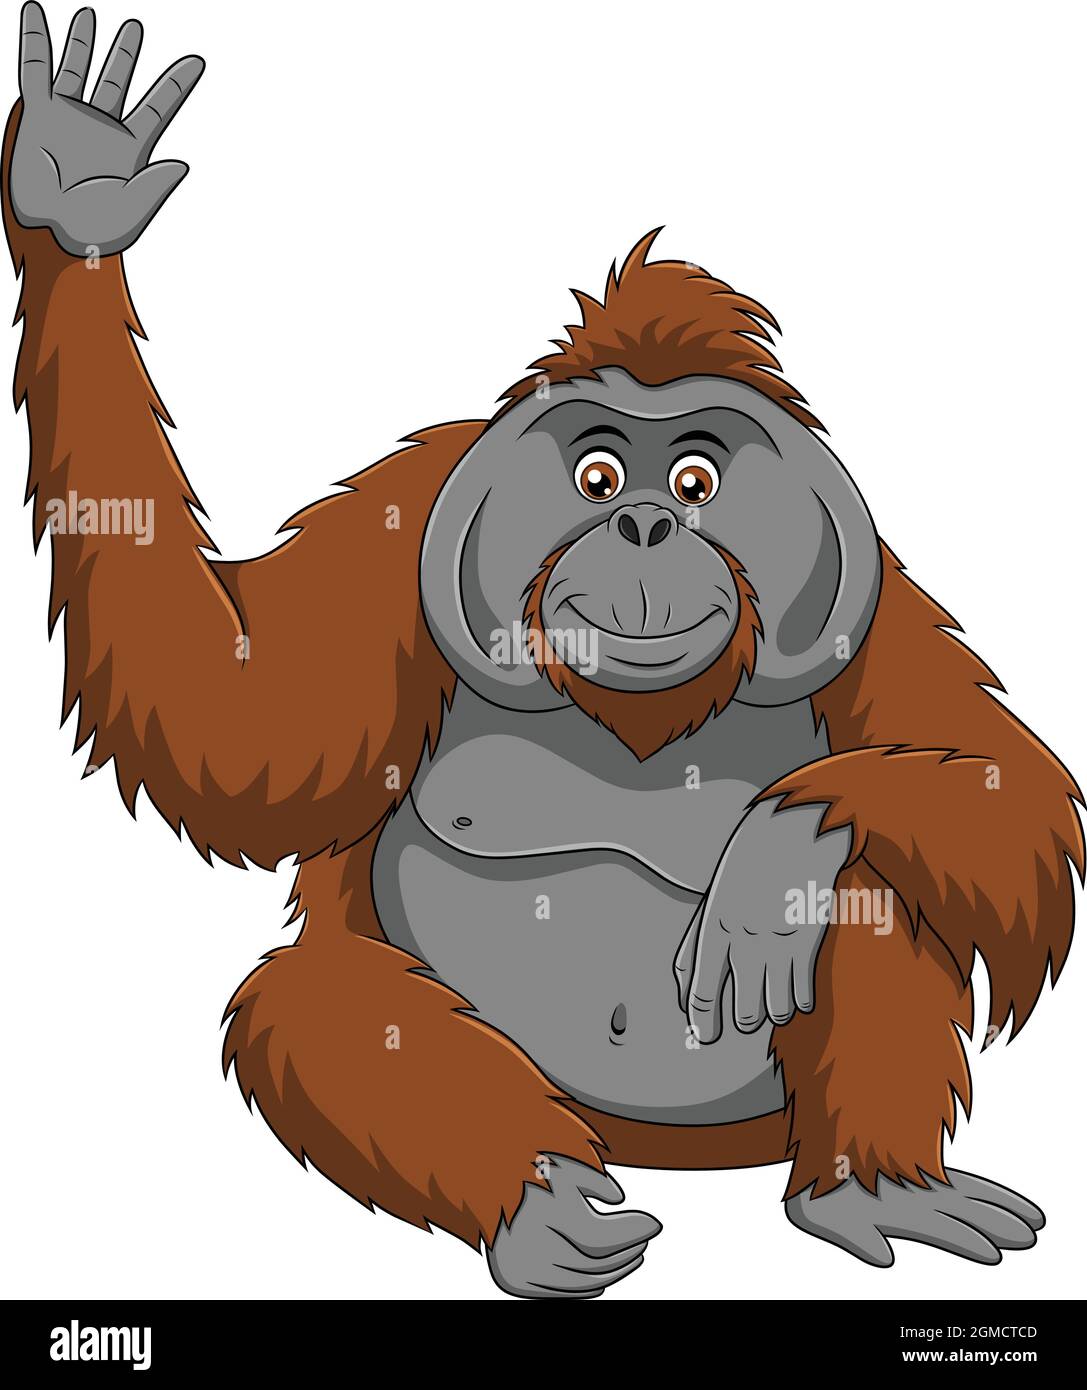 Cute Orangutan cartoon vector illustration Stock Vector Image ...